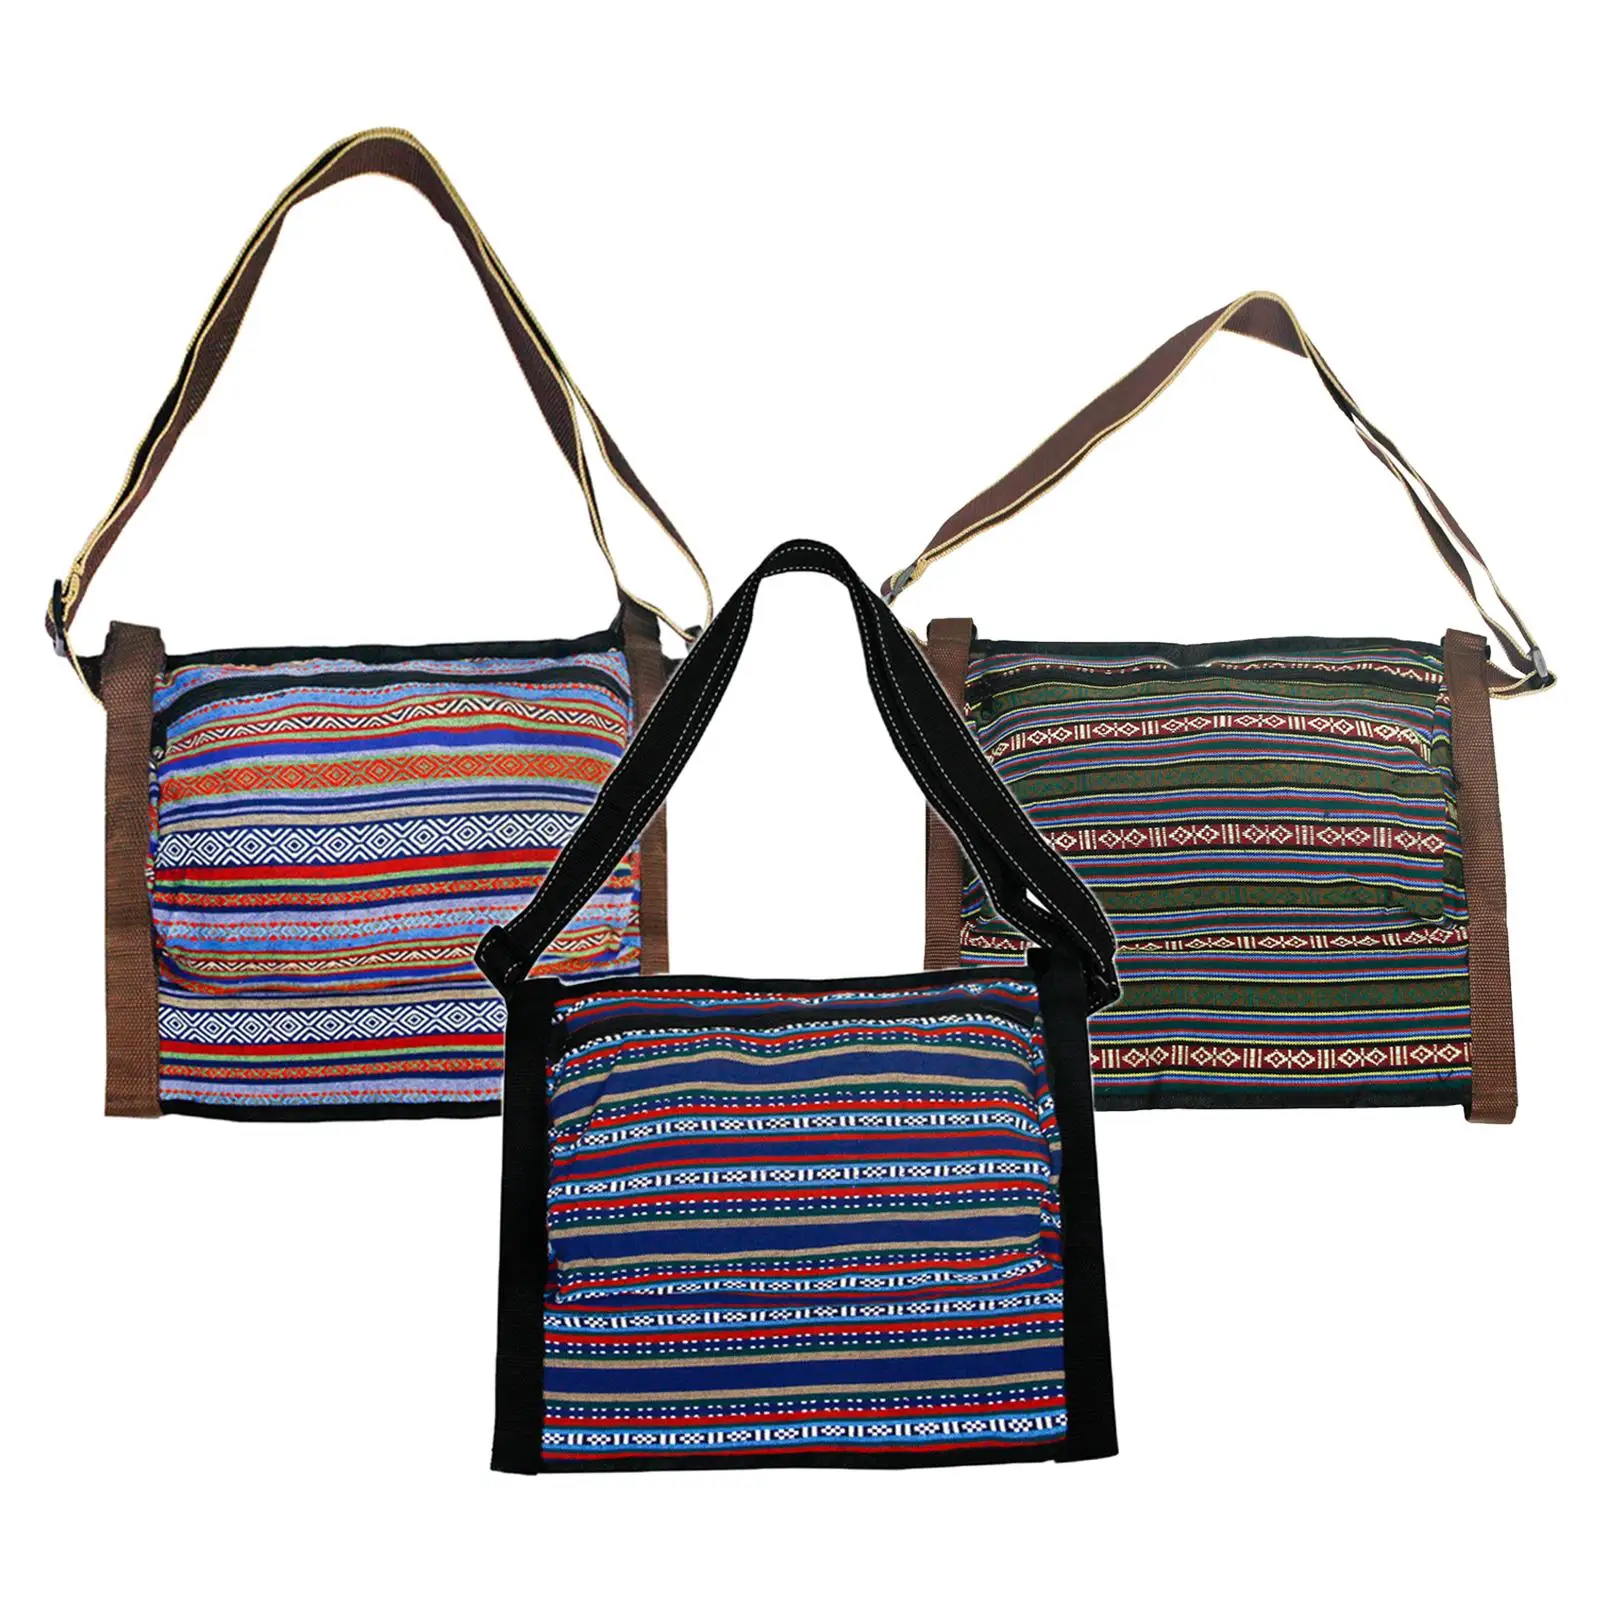 Portable Yoga Mat Bag Gym Adjustable with Pockets Carrier Tote Pilates Storage Handbag for Sports Exercise Travel Fitness